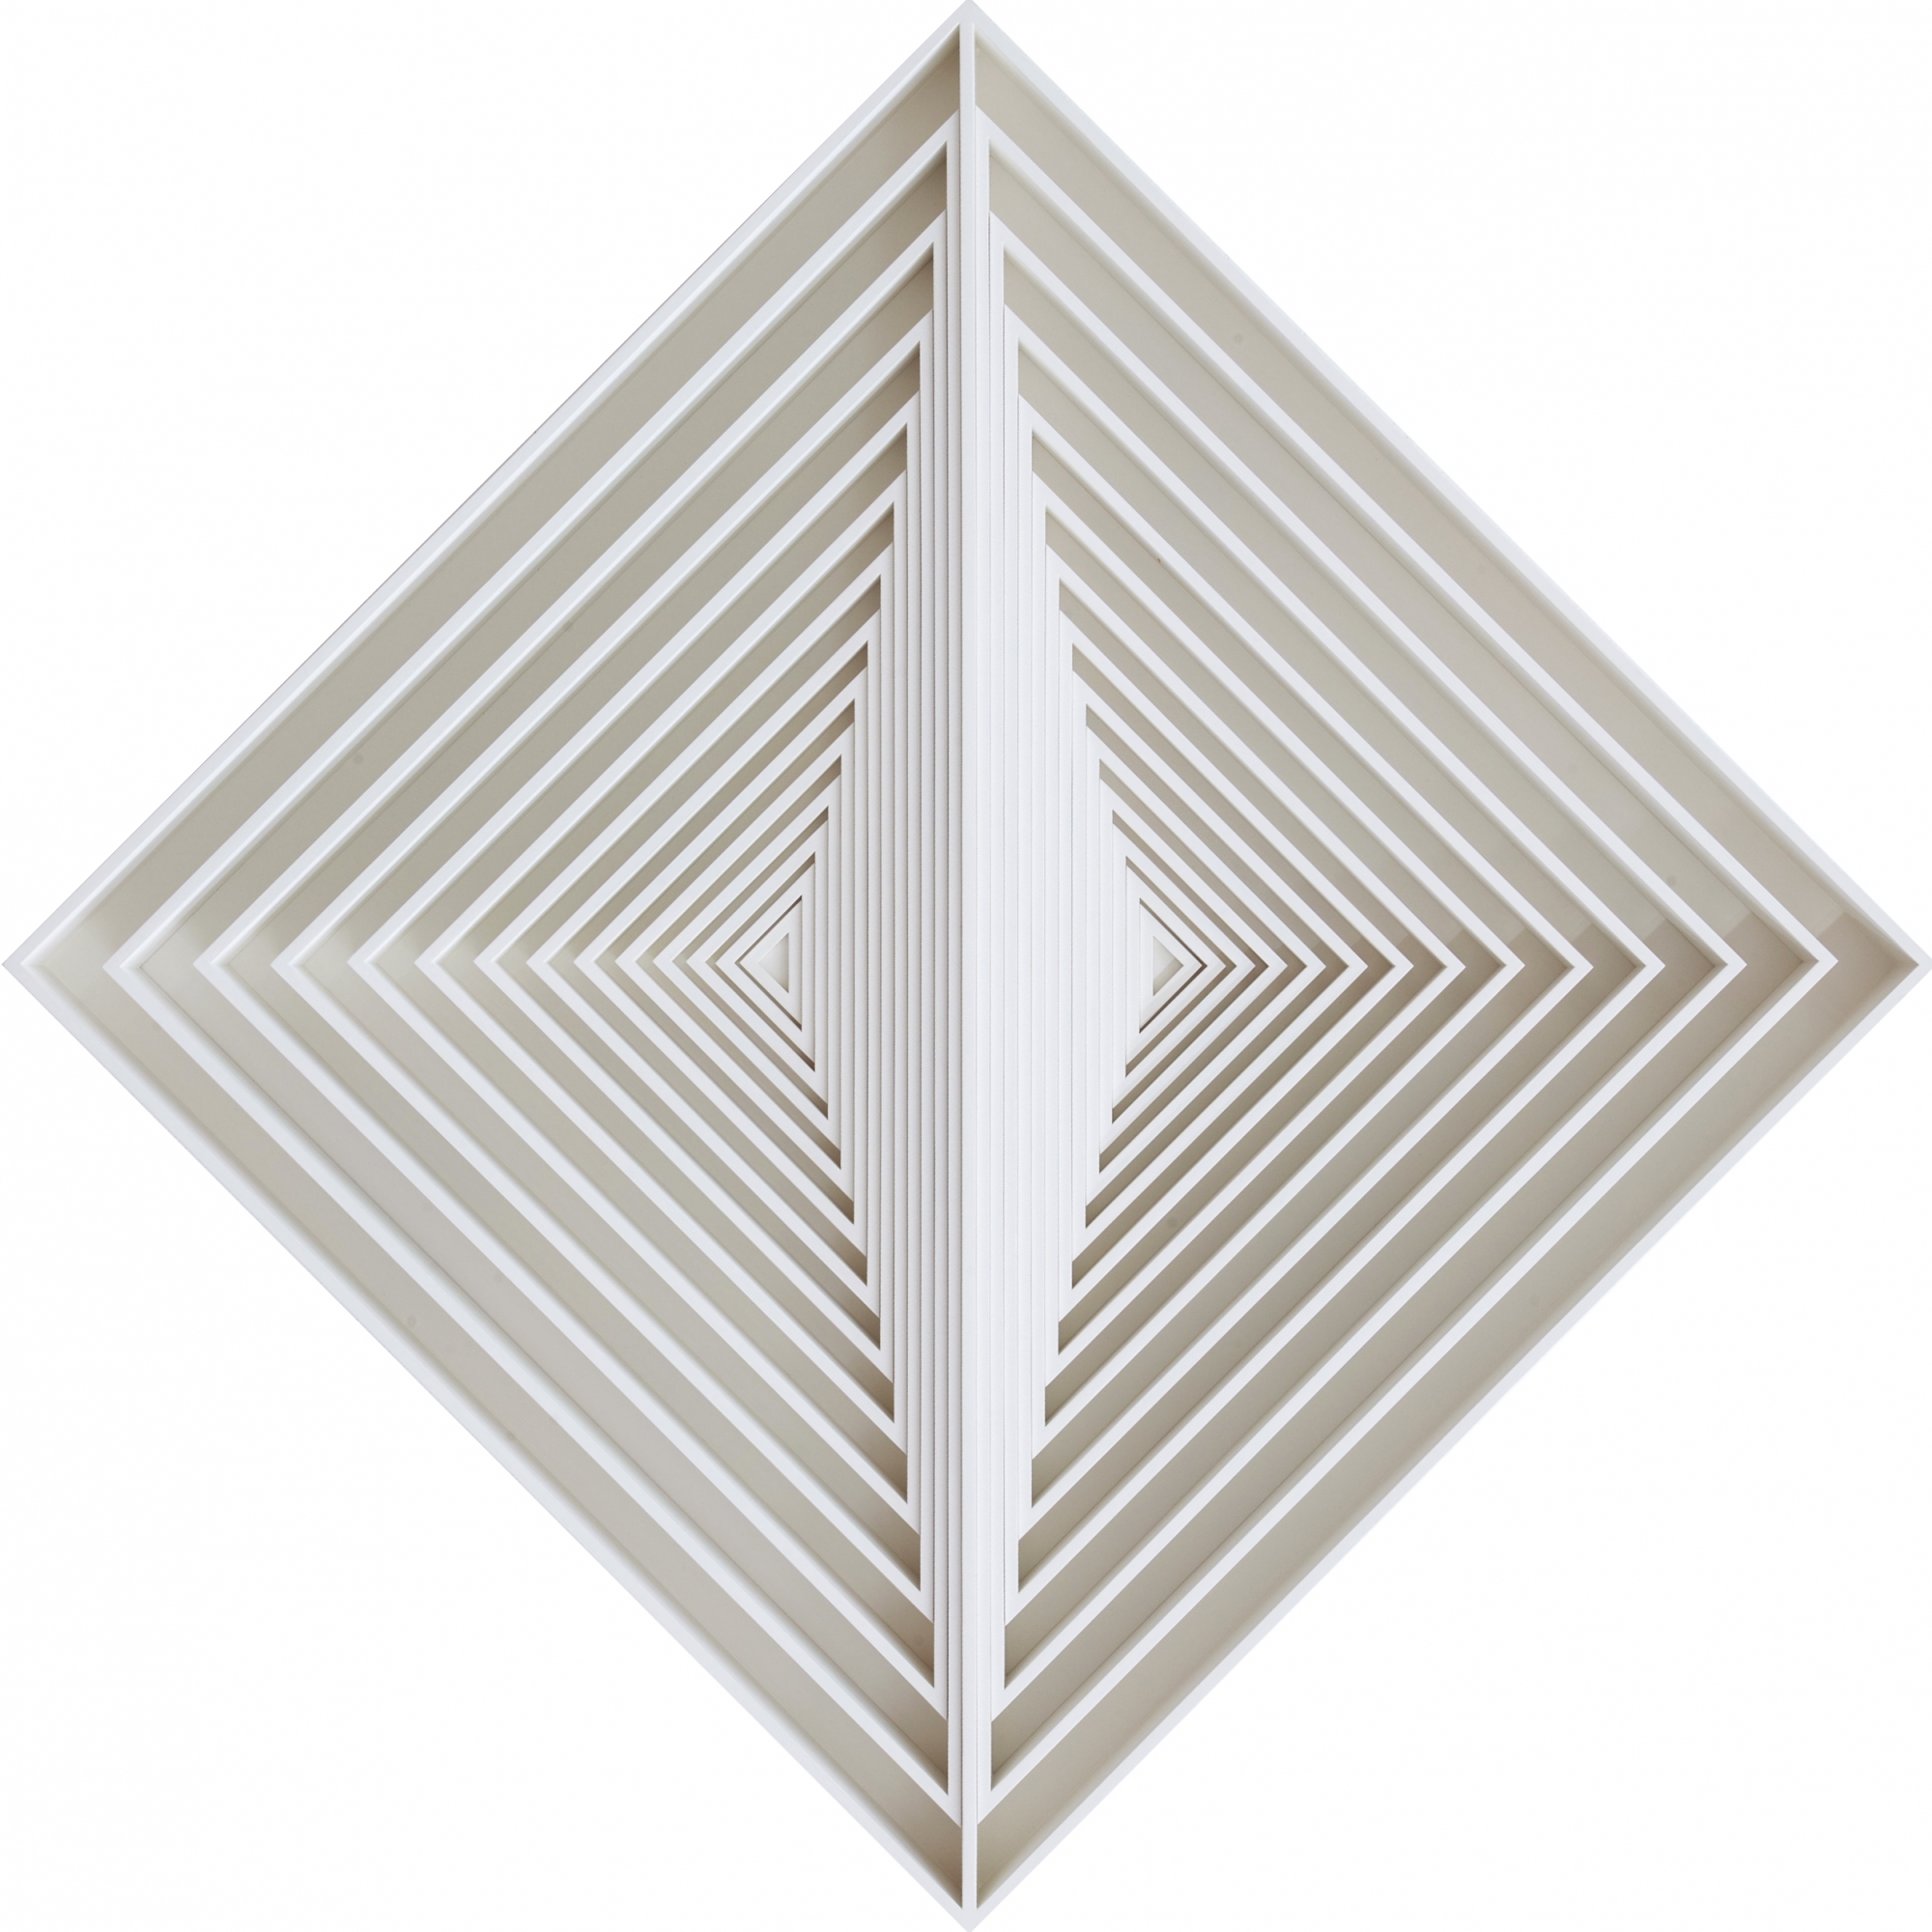 Ascânio MMM | Triângulos 1, 1969/2009